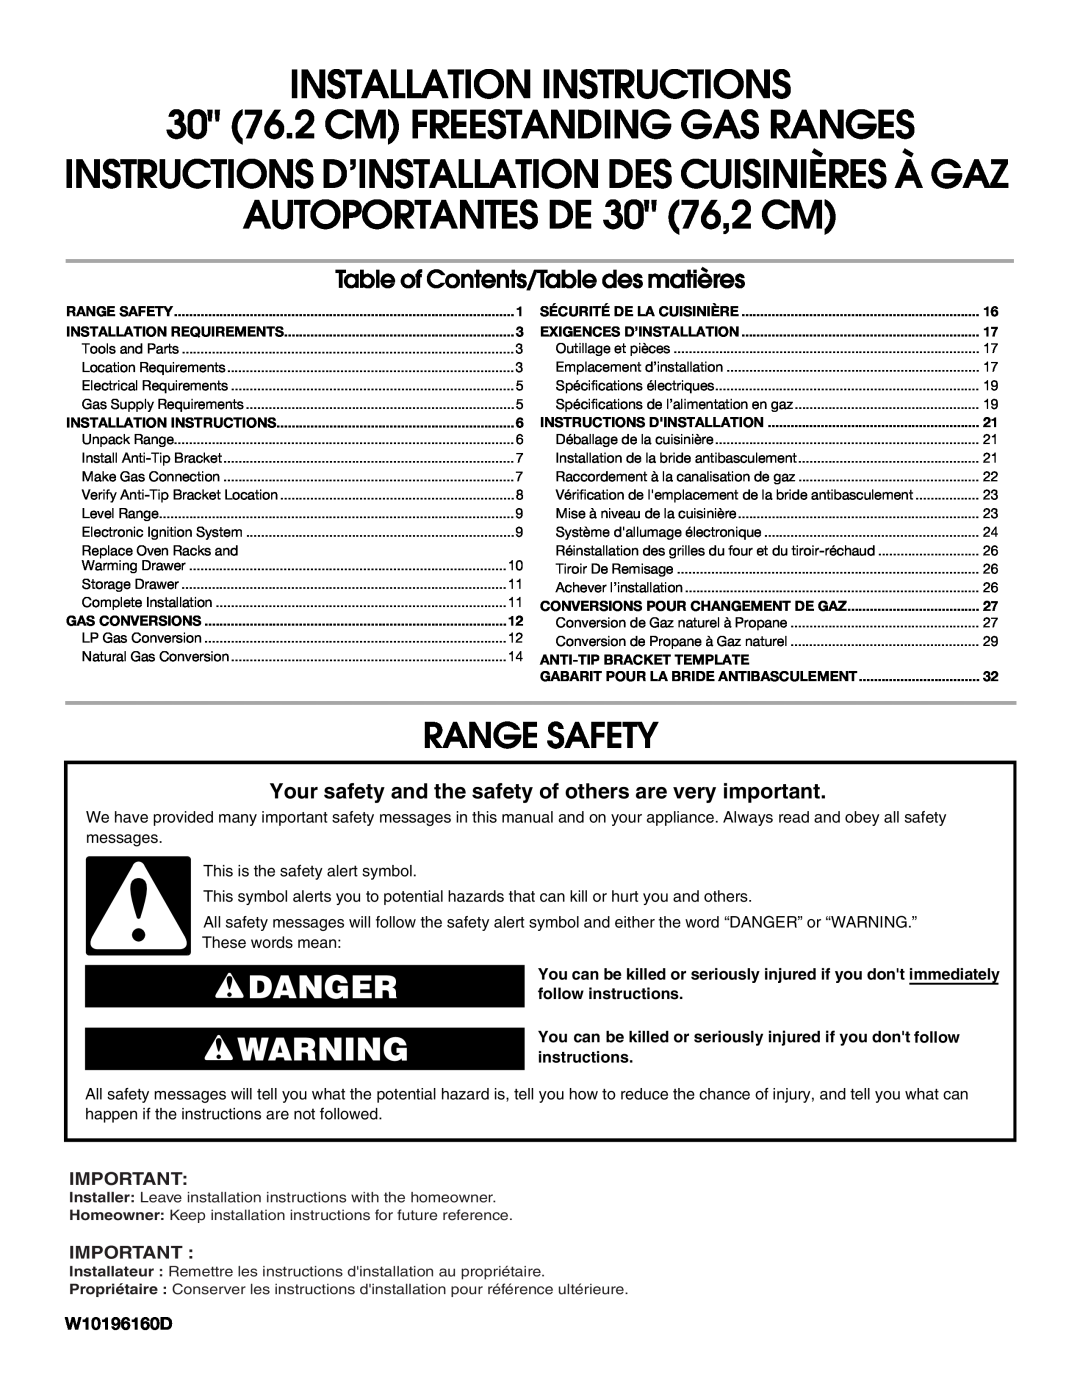 Whirlpool W10196160D installation instructions Instructions D’Installation Des Cuisinières À Gaz, Range Safety, Danger 